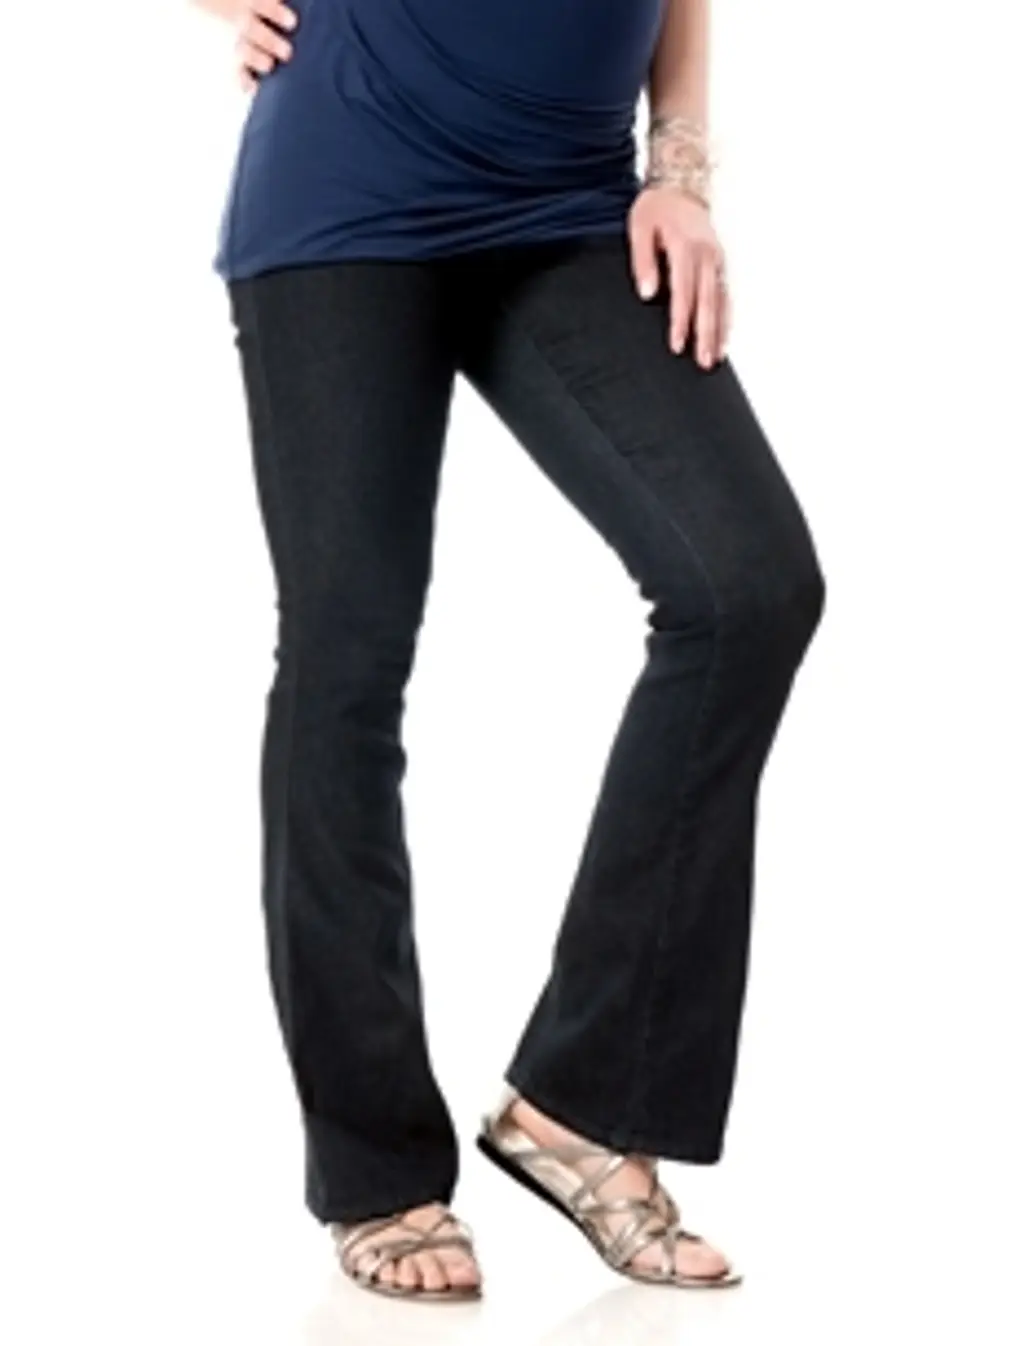 Motherhood "Loved by Heidi Klum Secret Fit Belly Super Stretch Slim Leg Maternity Jeans"